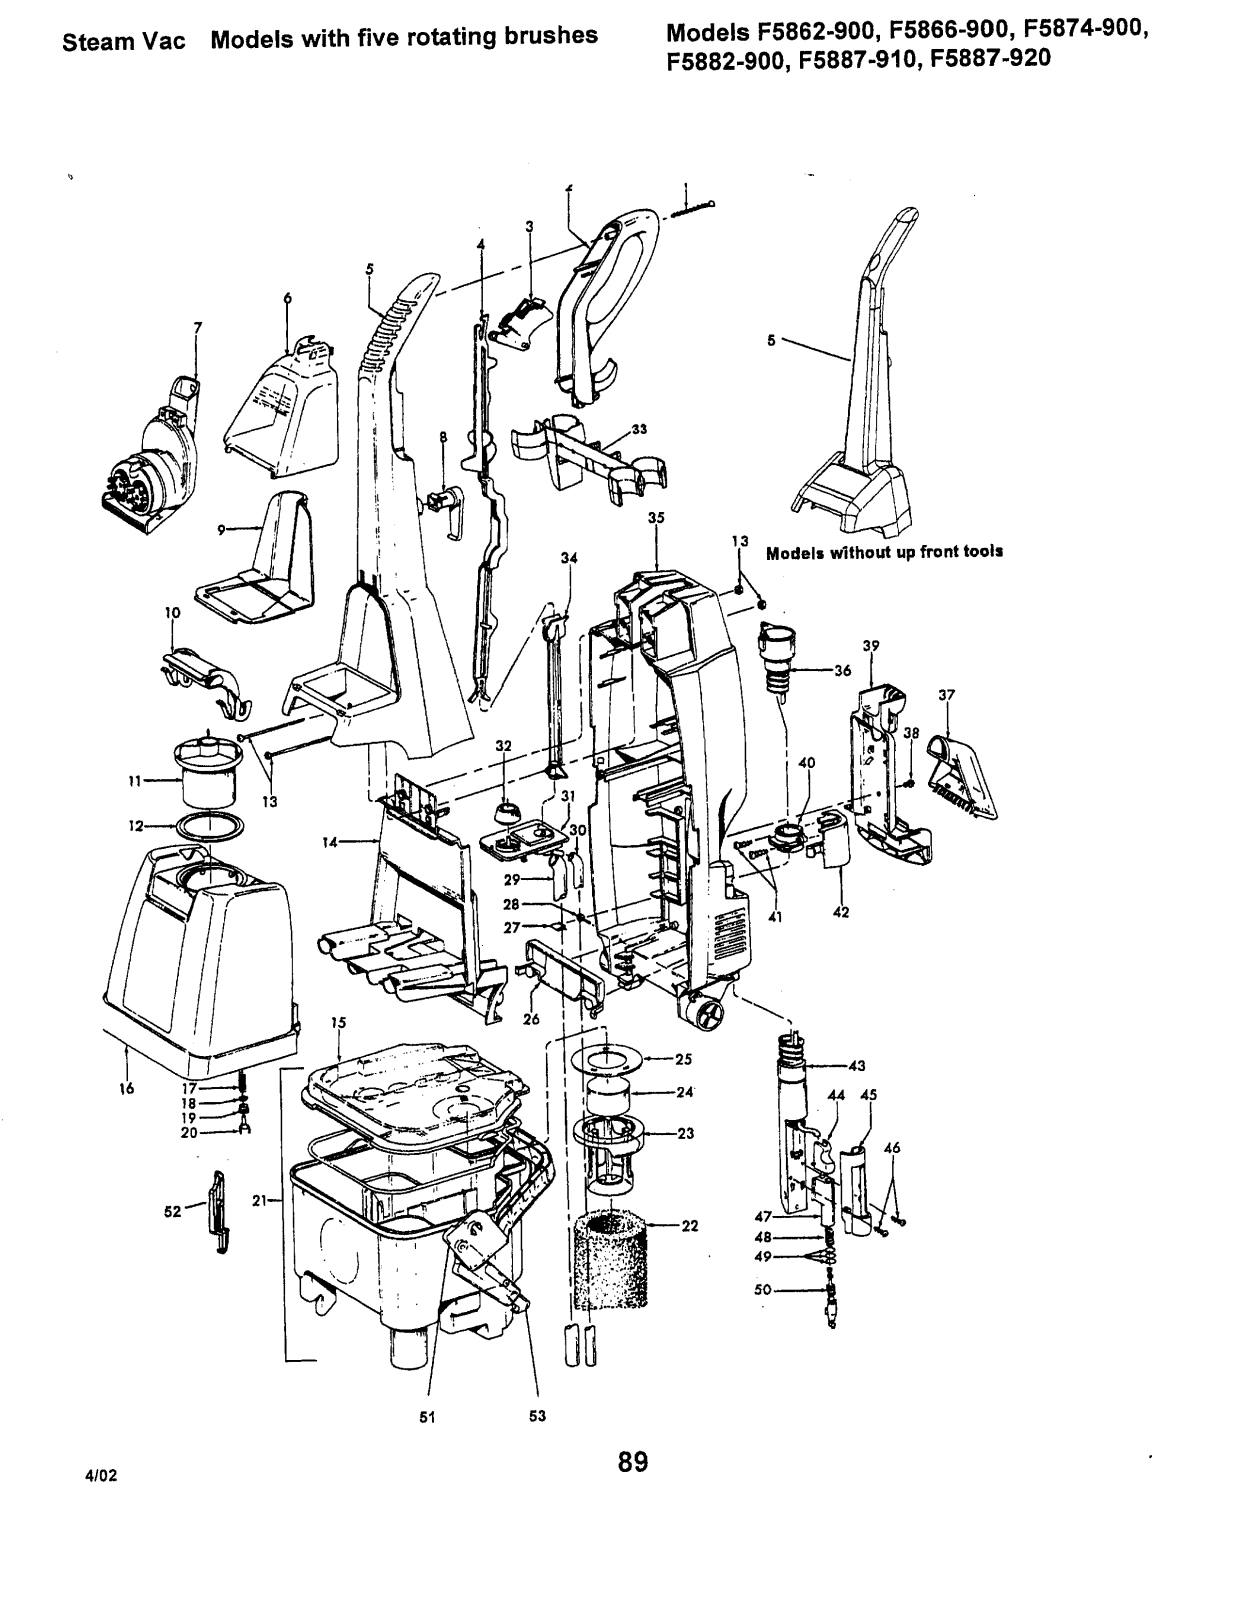 Hoover F5866-900, F5862-900, F5887-920, F5887-910, F5874-900 Owner's Manual